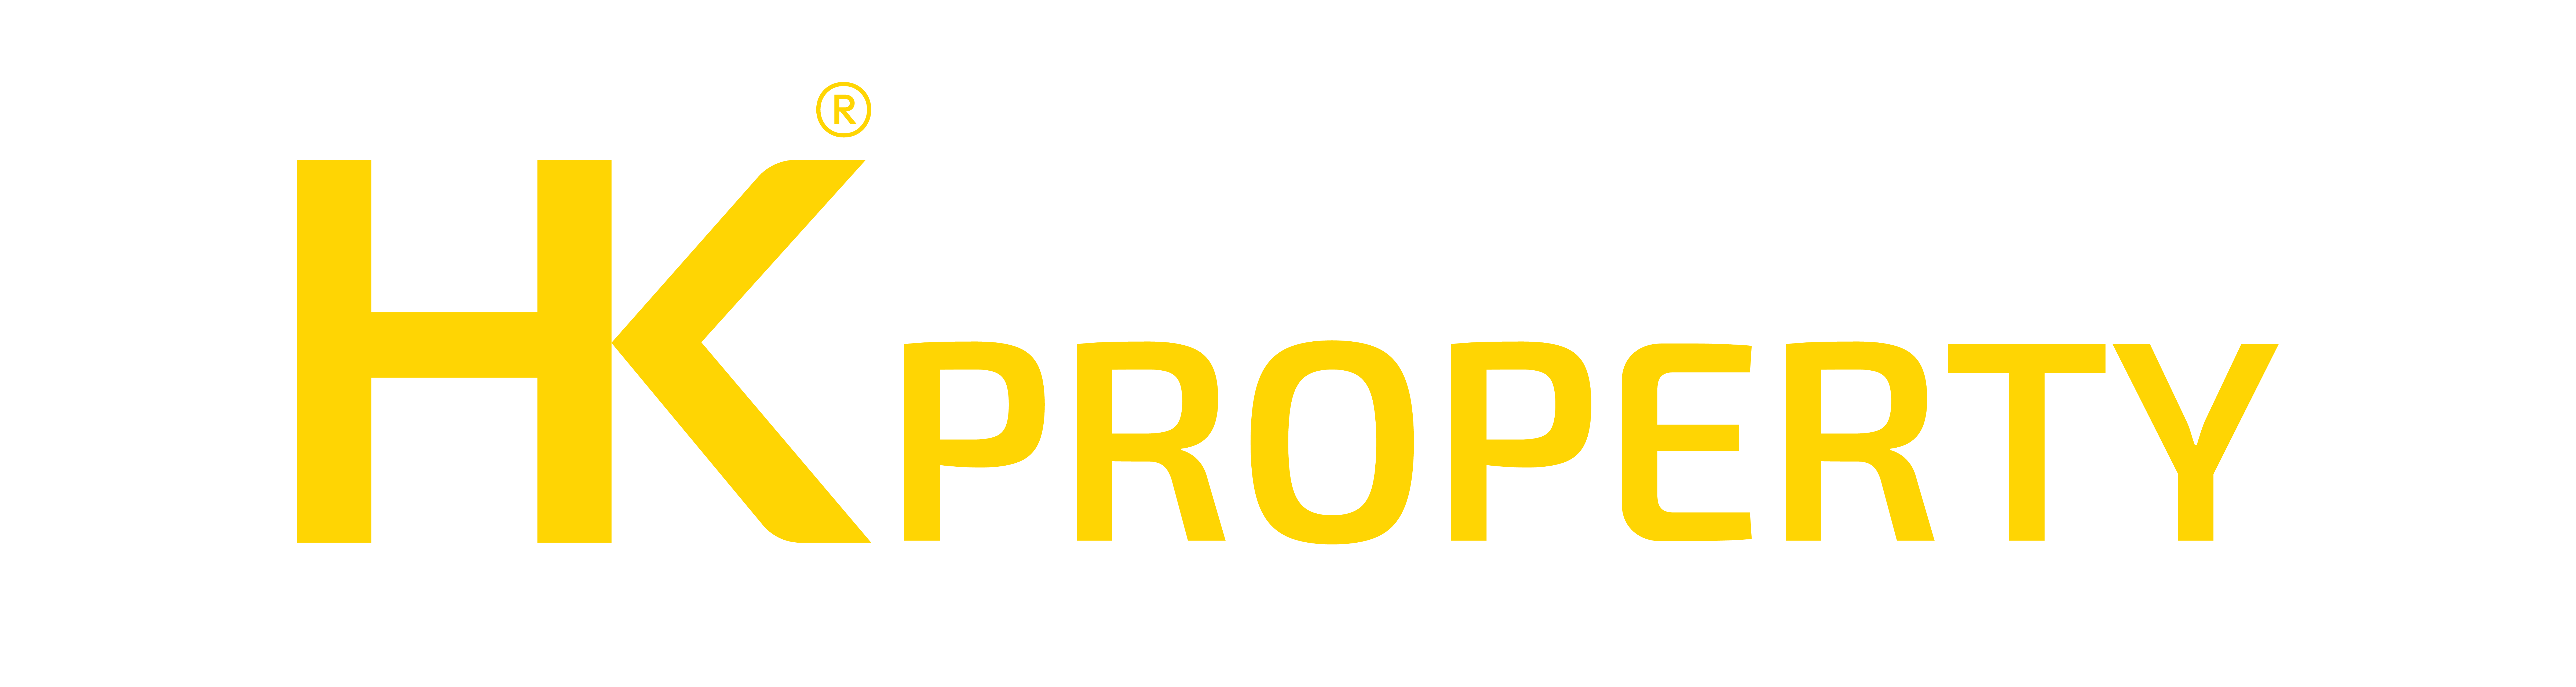 HK Property